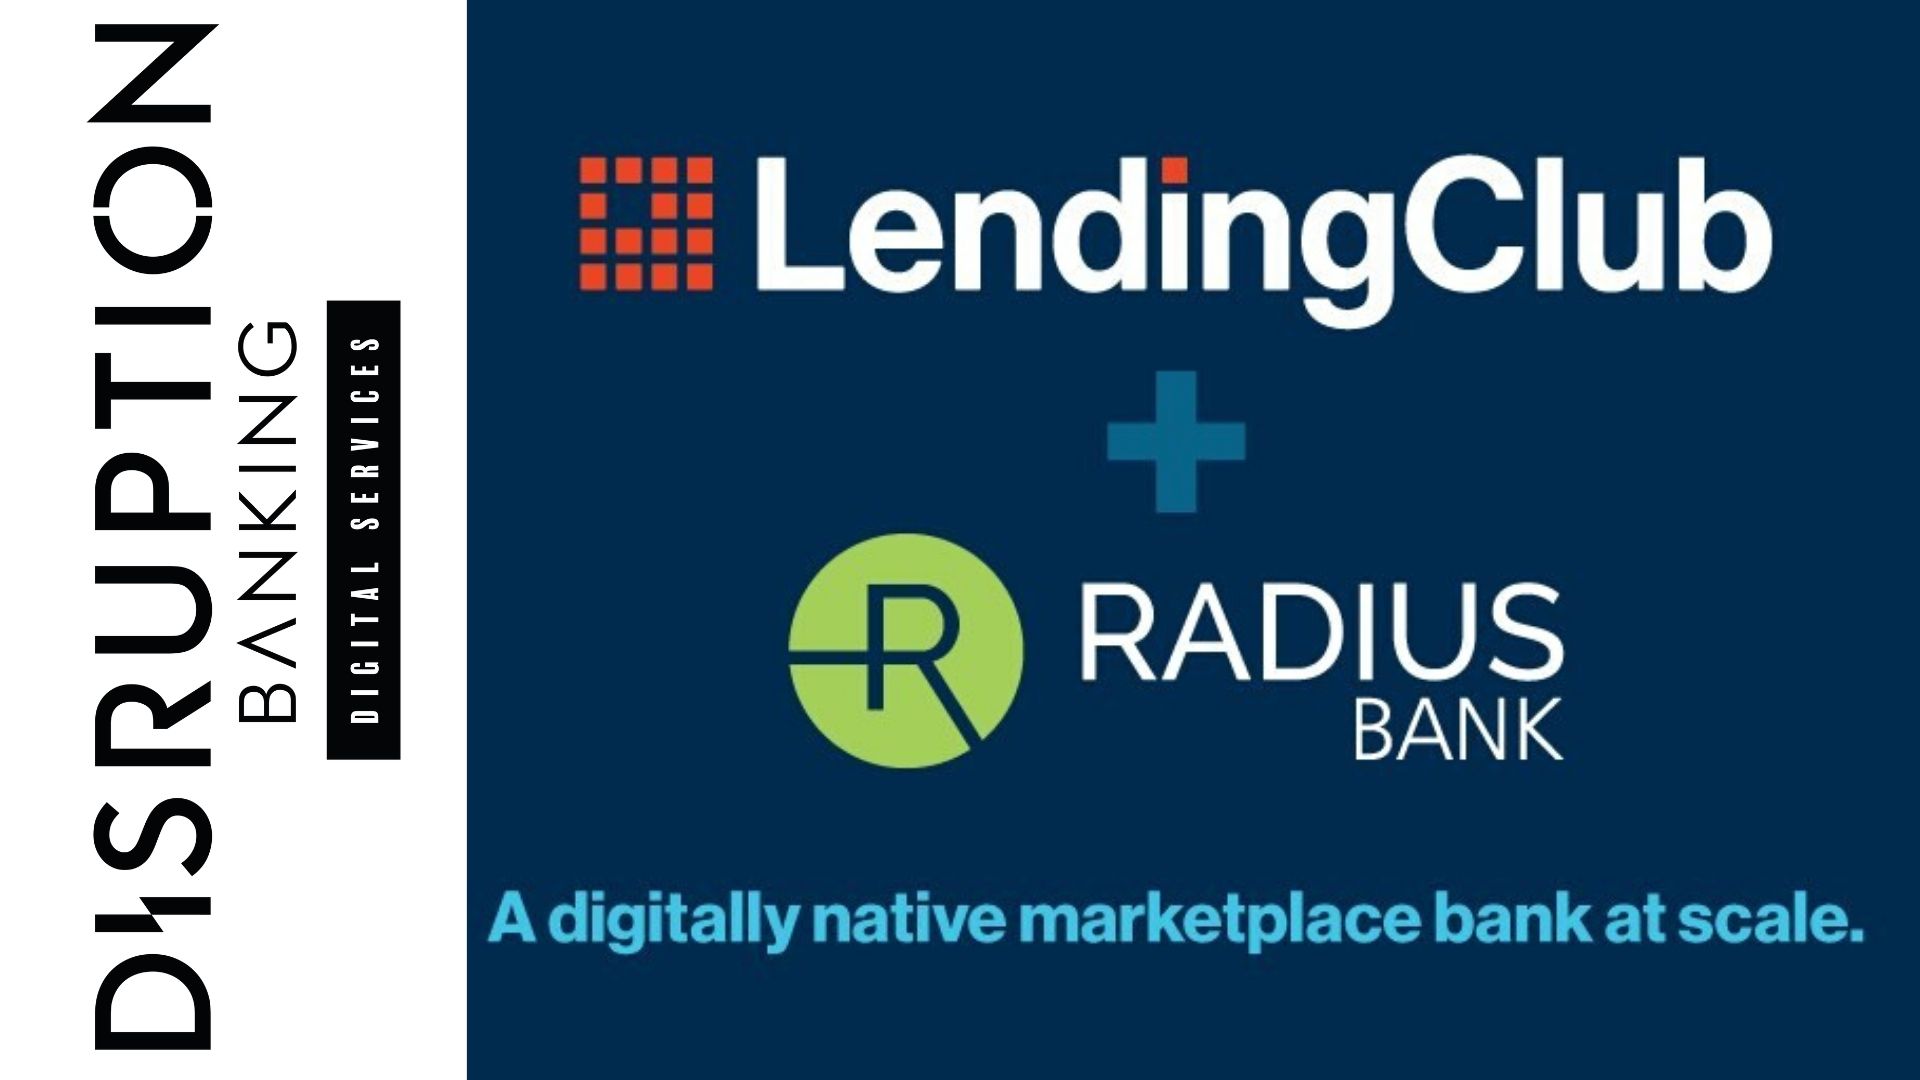 LendingClub Radius Bank disruptionbanking ignatius bowsskill dutkiewicz